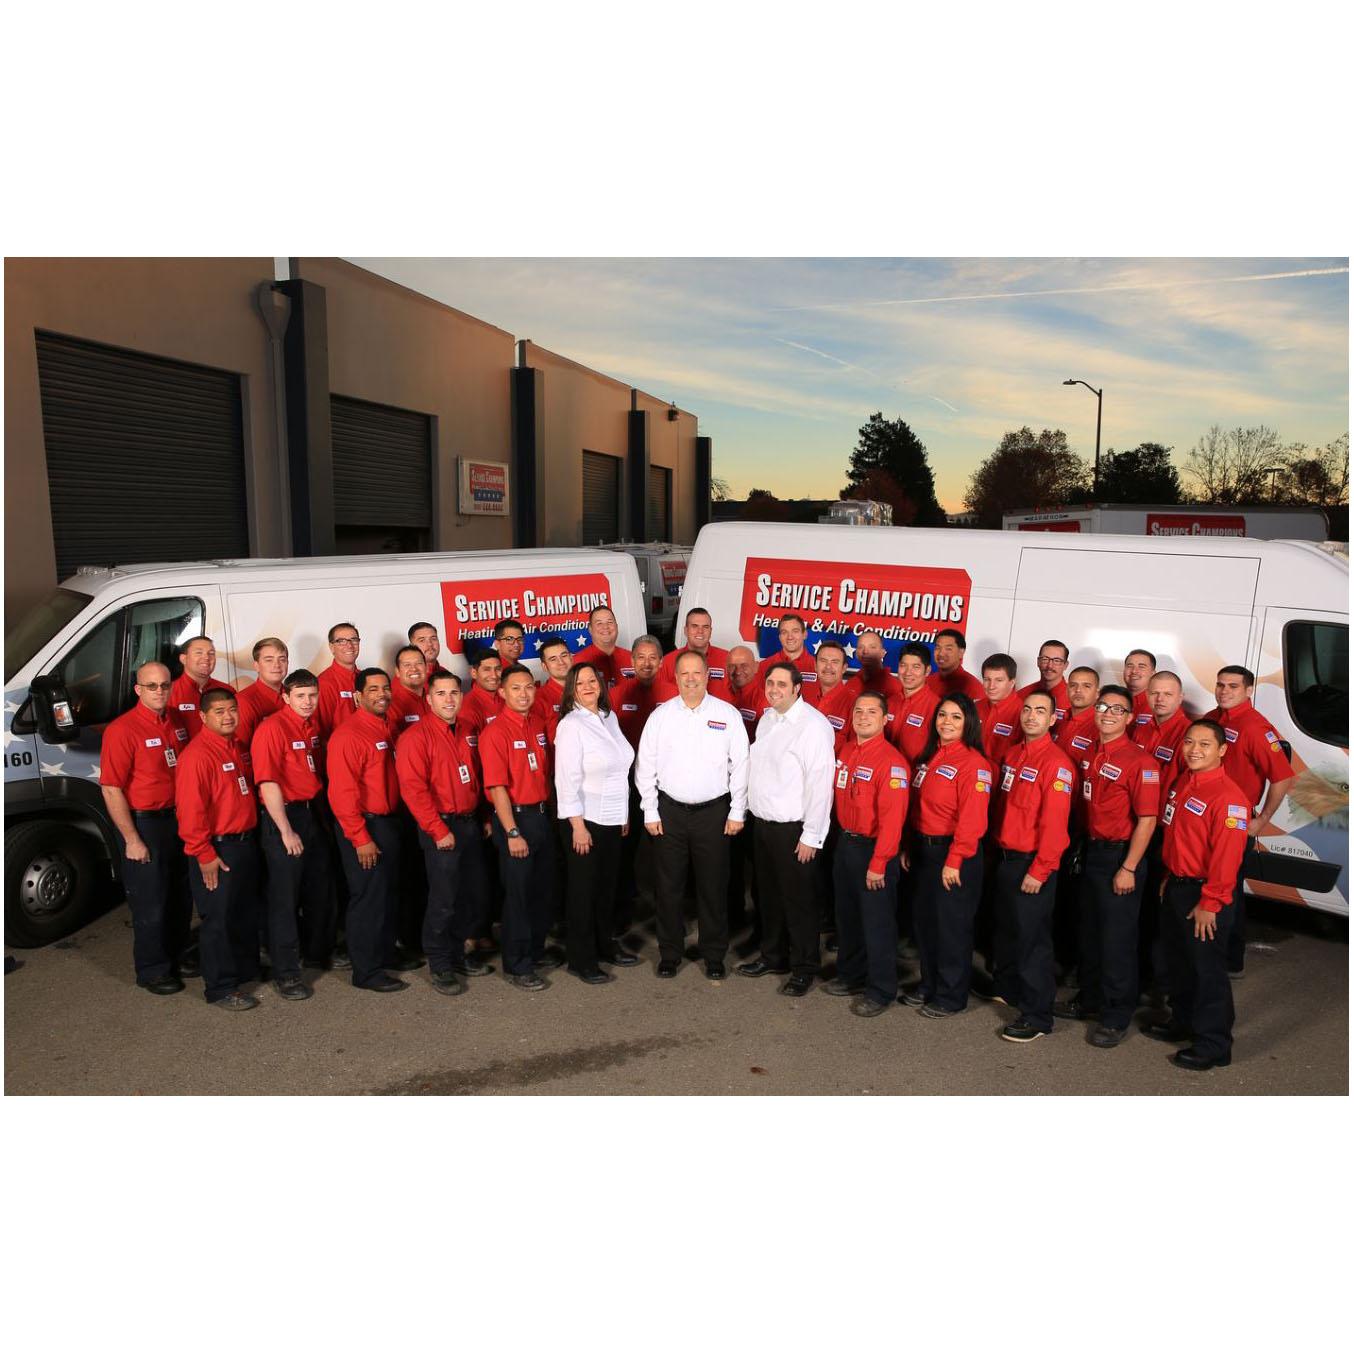 Picture of Service Champions - Livermore Center - Service Champions